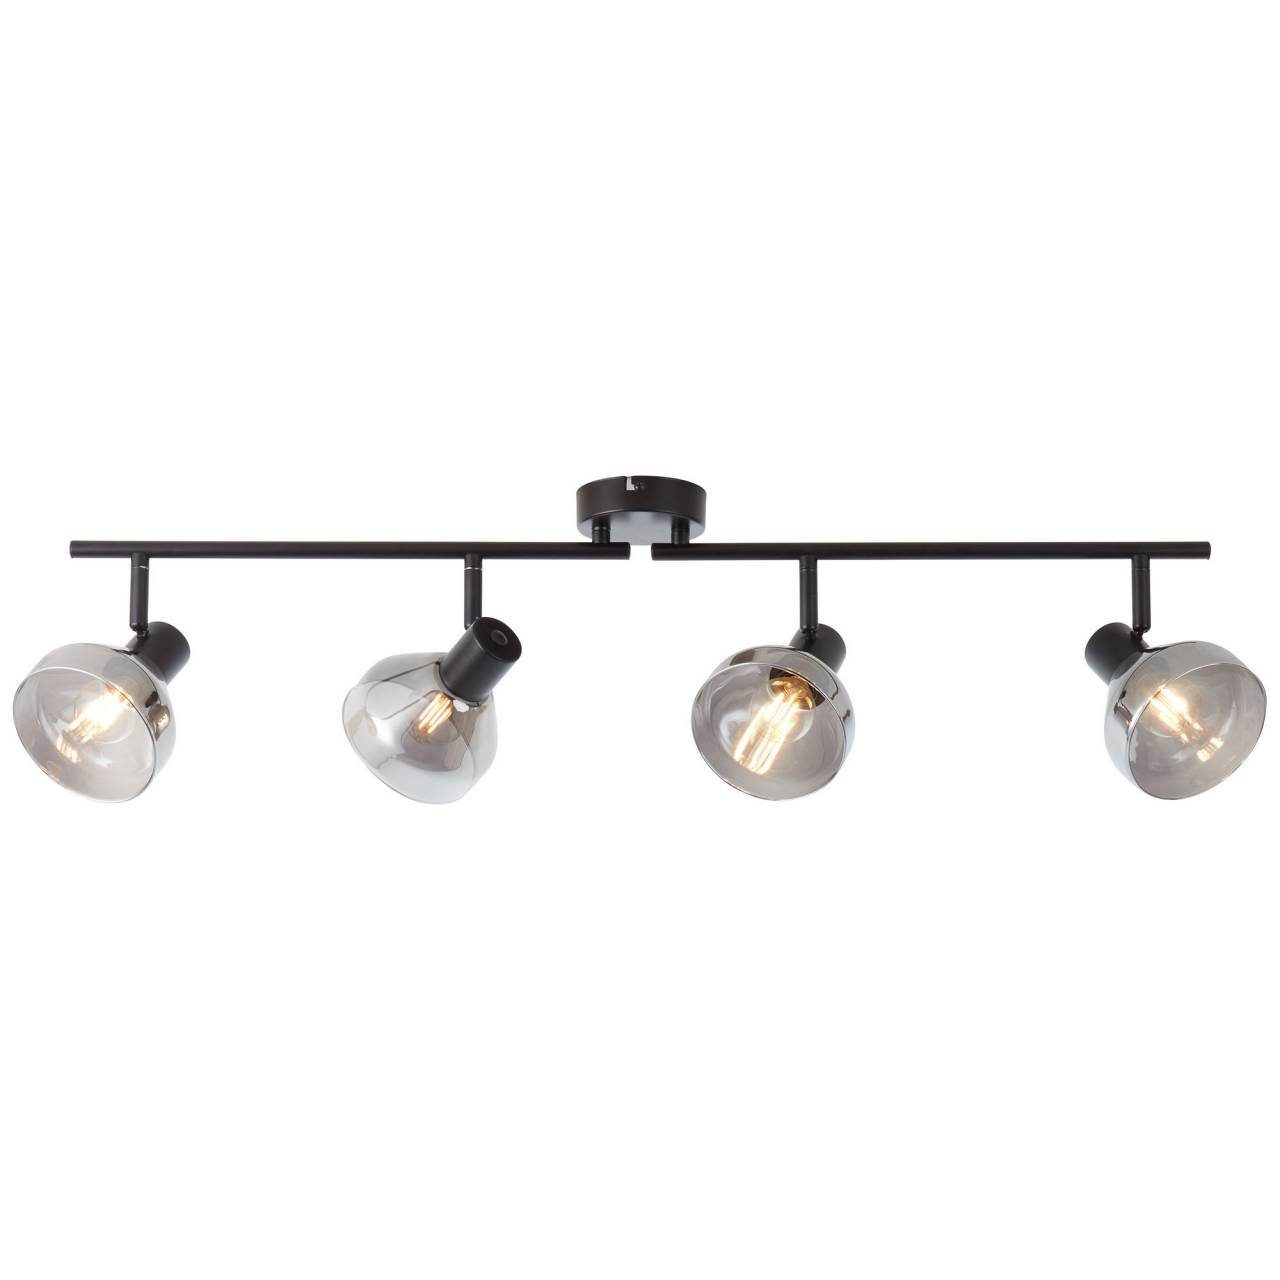 Reflekt, E14, schwarzmatt/rauchglas D45, 4x 4flg 18W Brilliant Spotrohr Reflekt Deckenleuchte Lampe